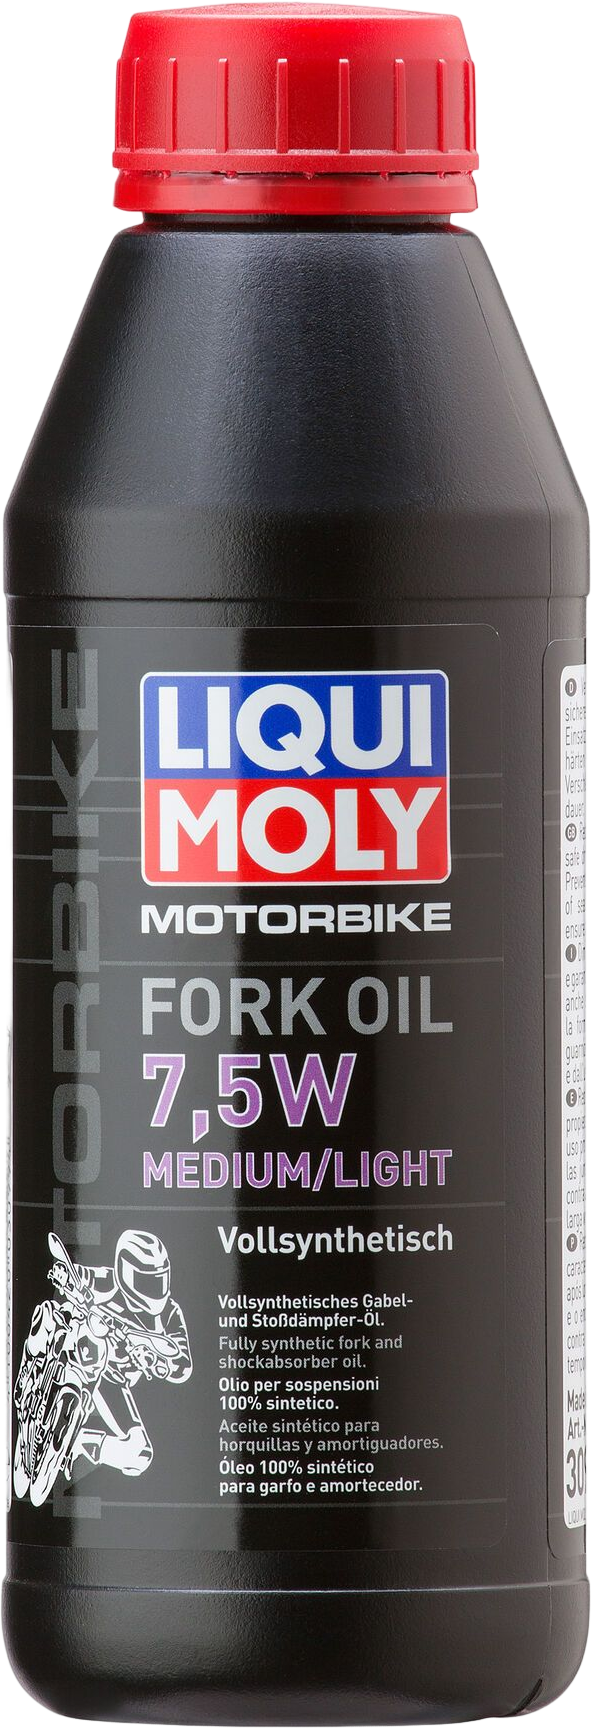 Liqui Moly Motorbike Fork Oil 7,5W medium/light, 500 ml